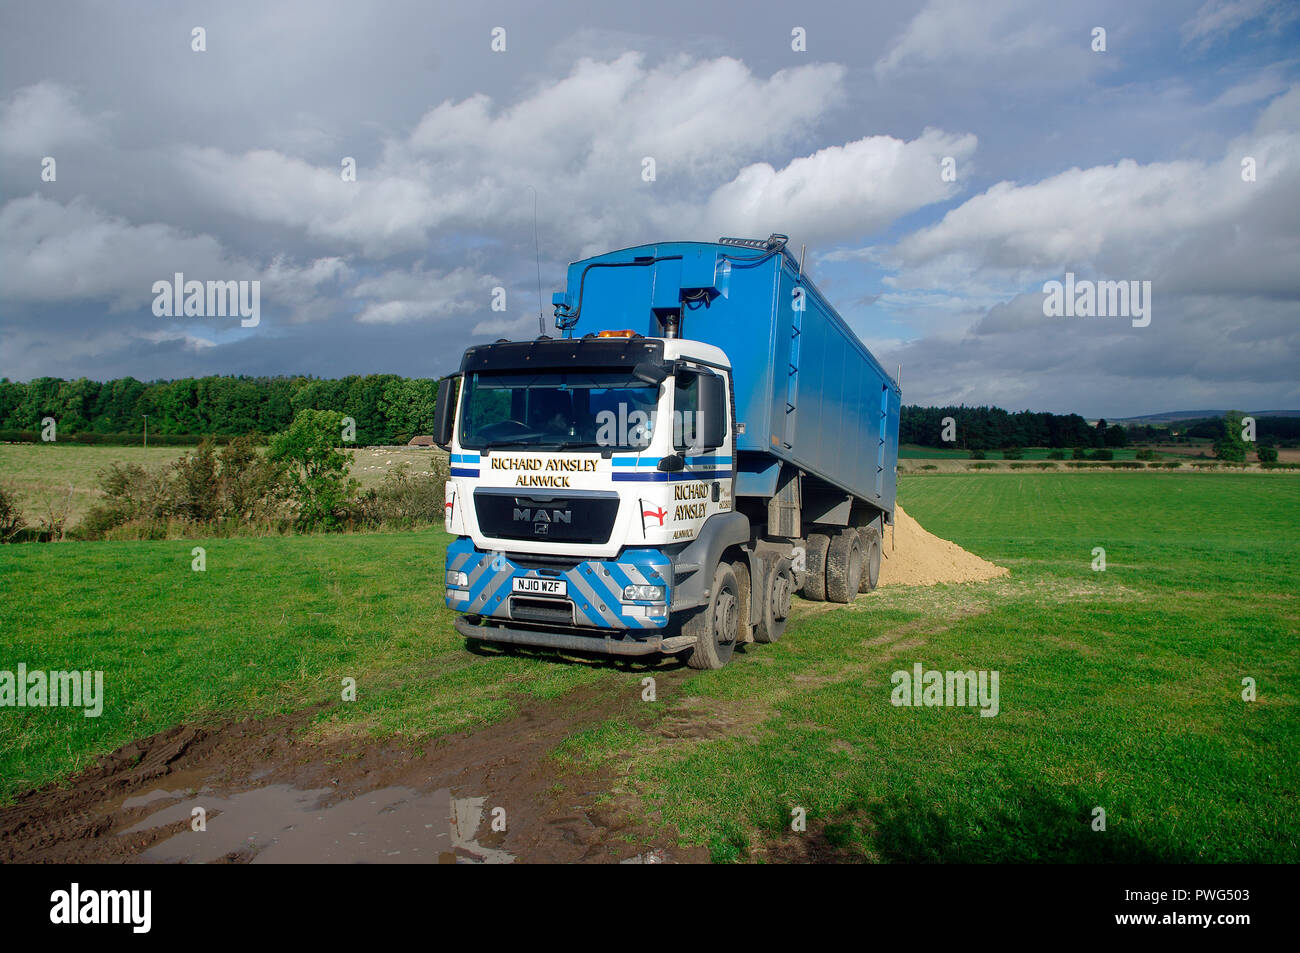 MAN 165.32 truck Stock Photo